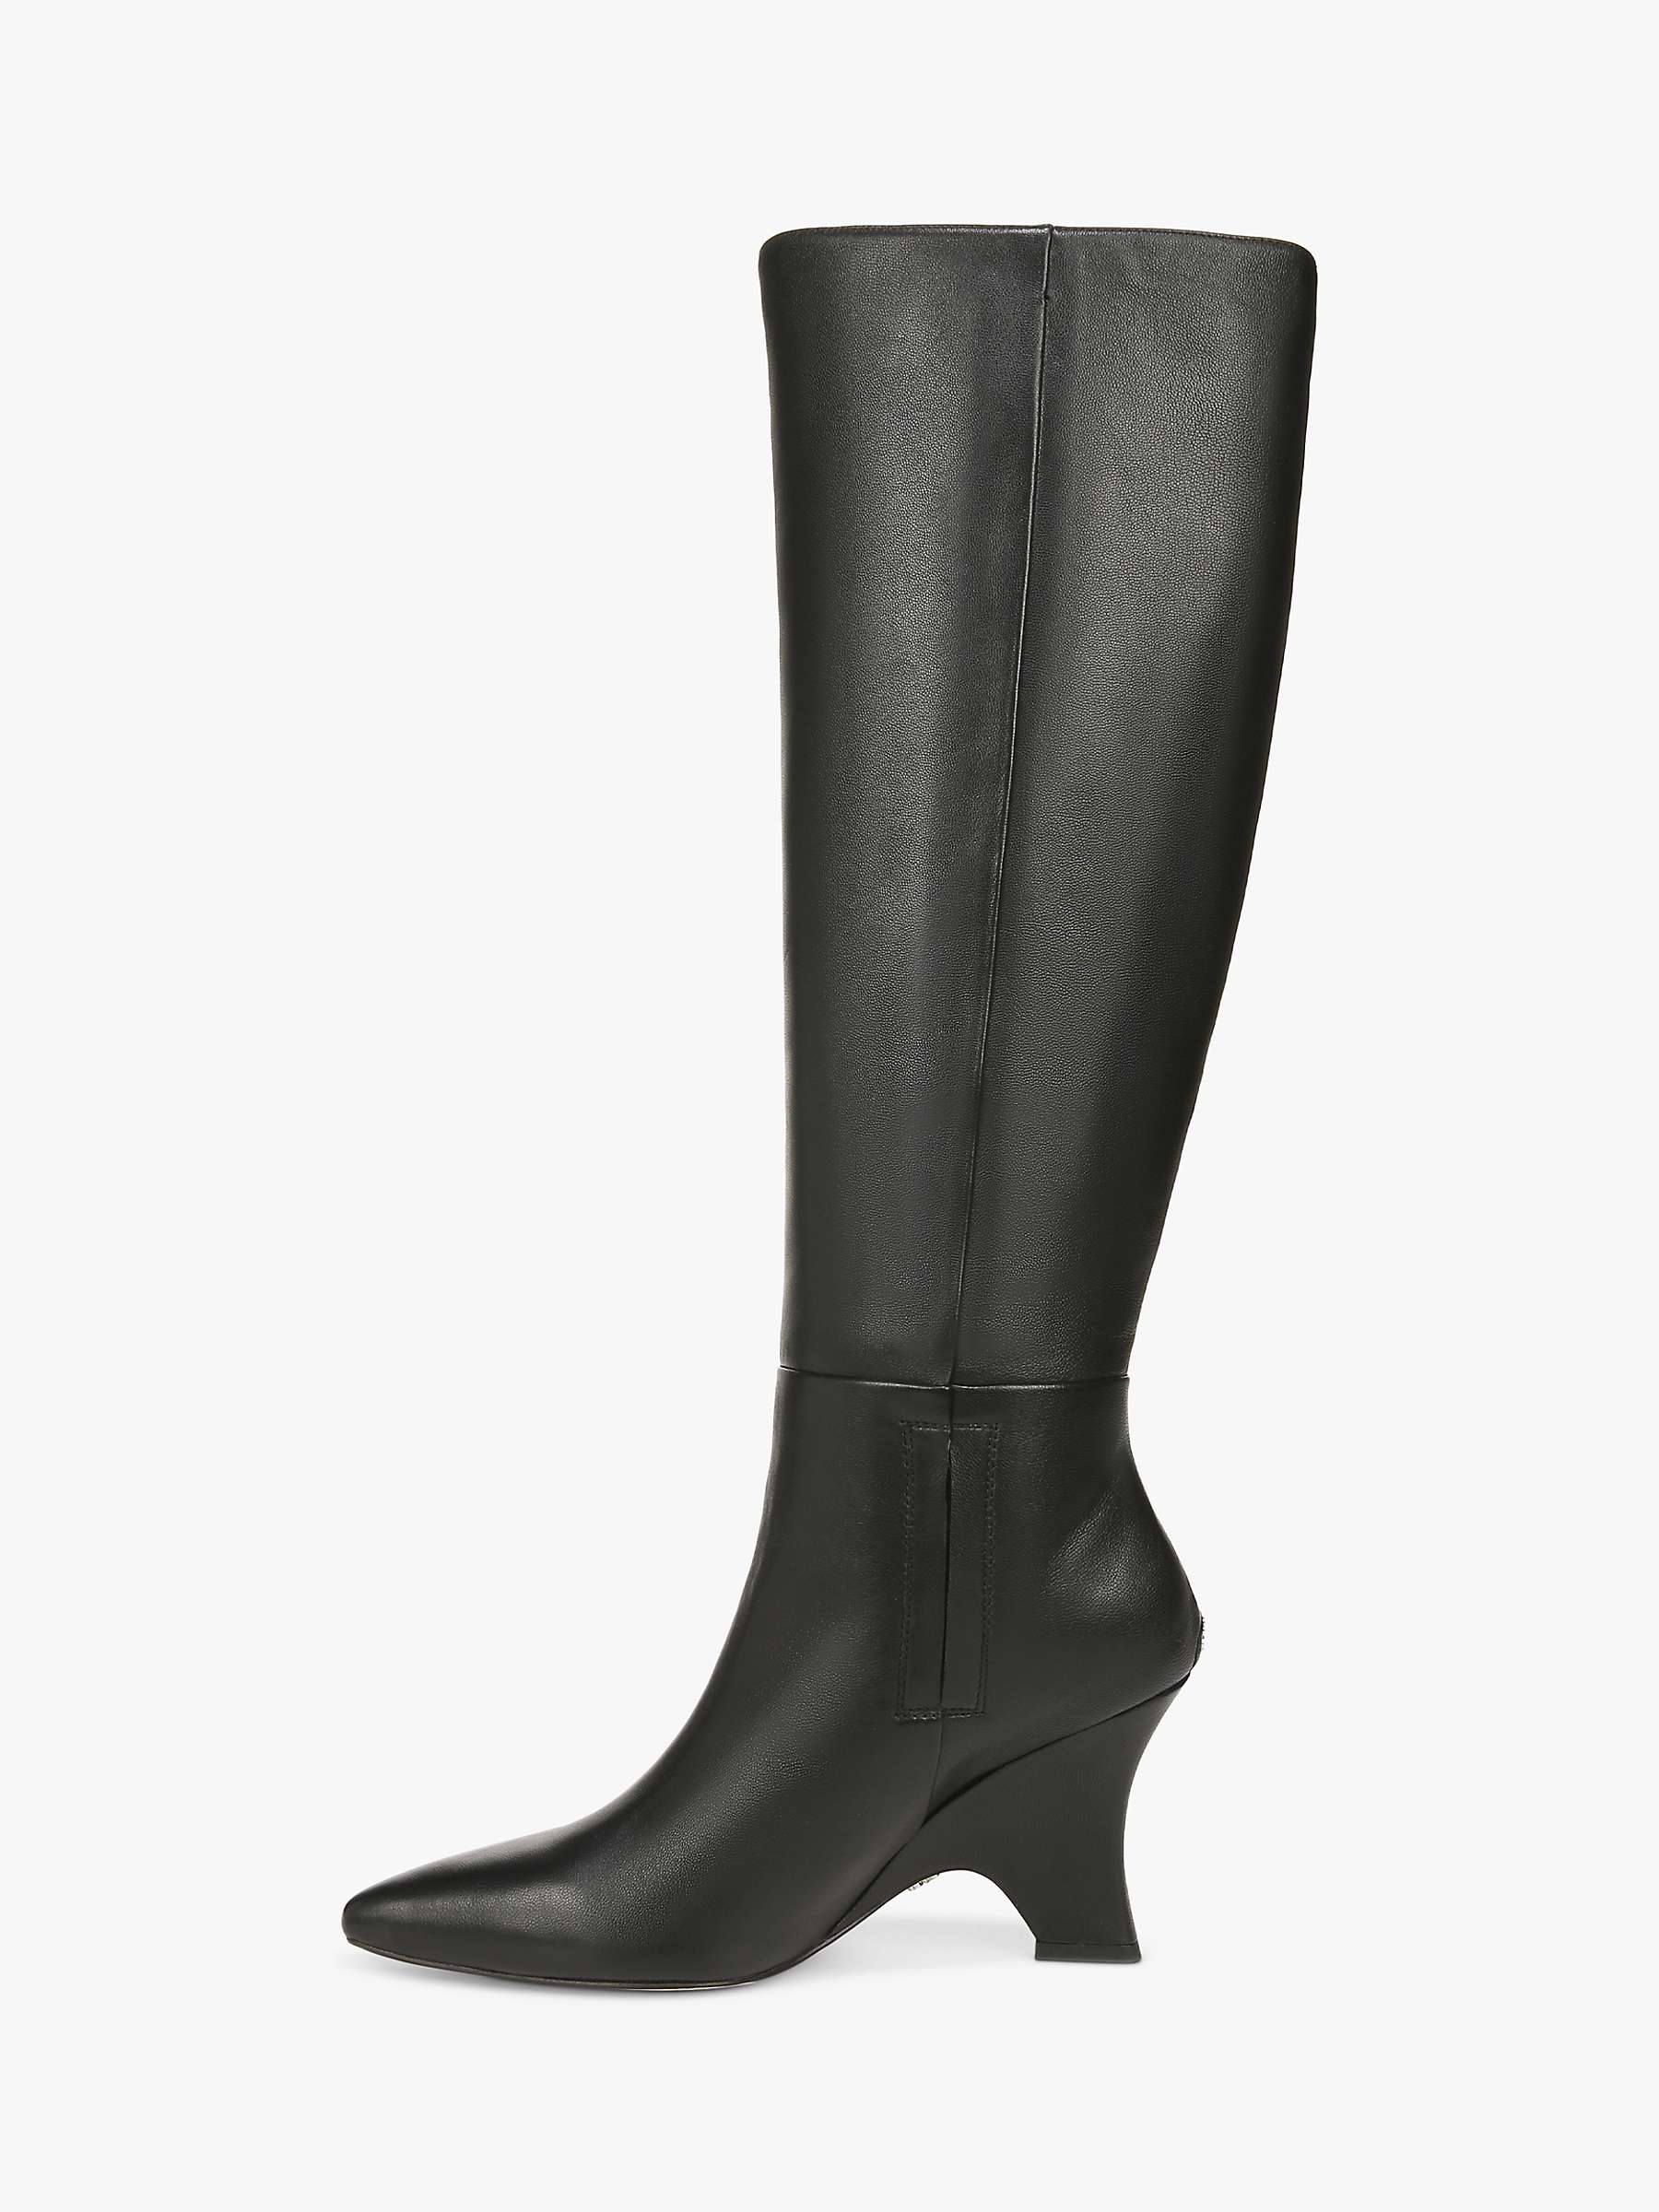 Buy Sam Edelman Vance Knee High Leather Boots, Black Online at johnlewis.com